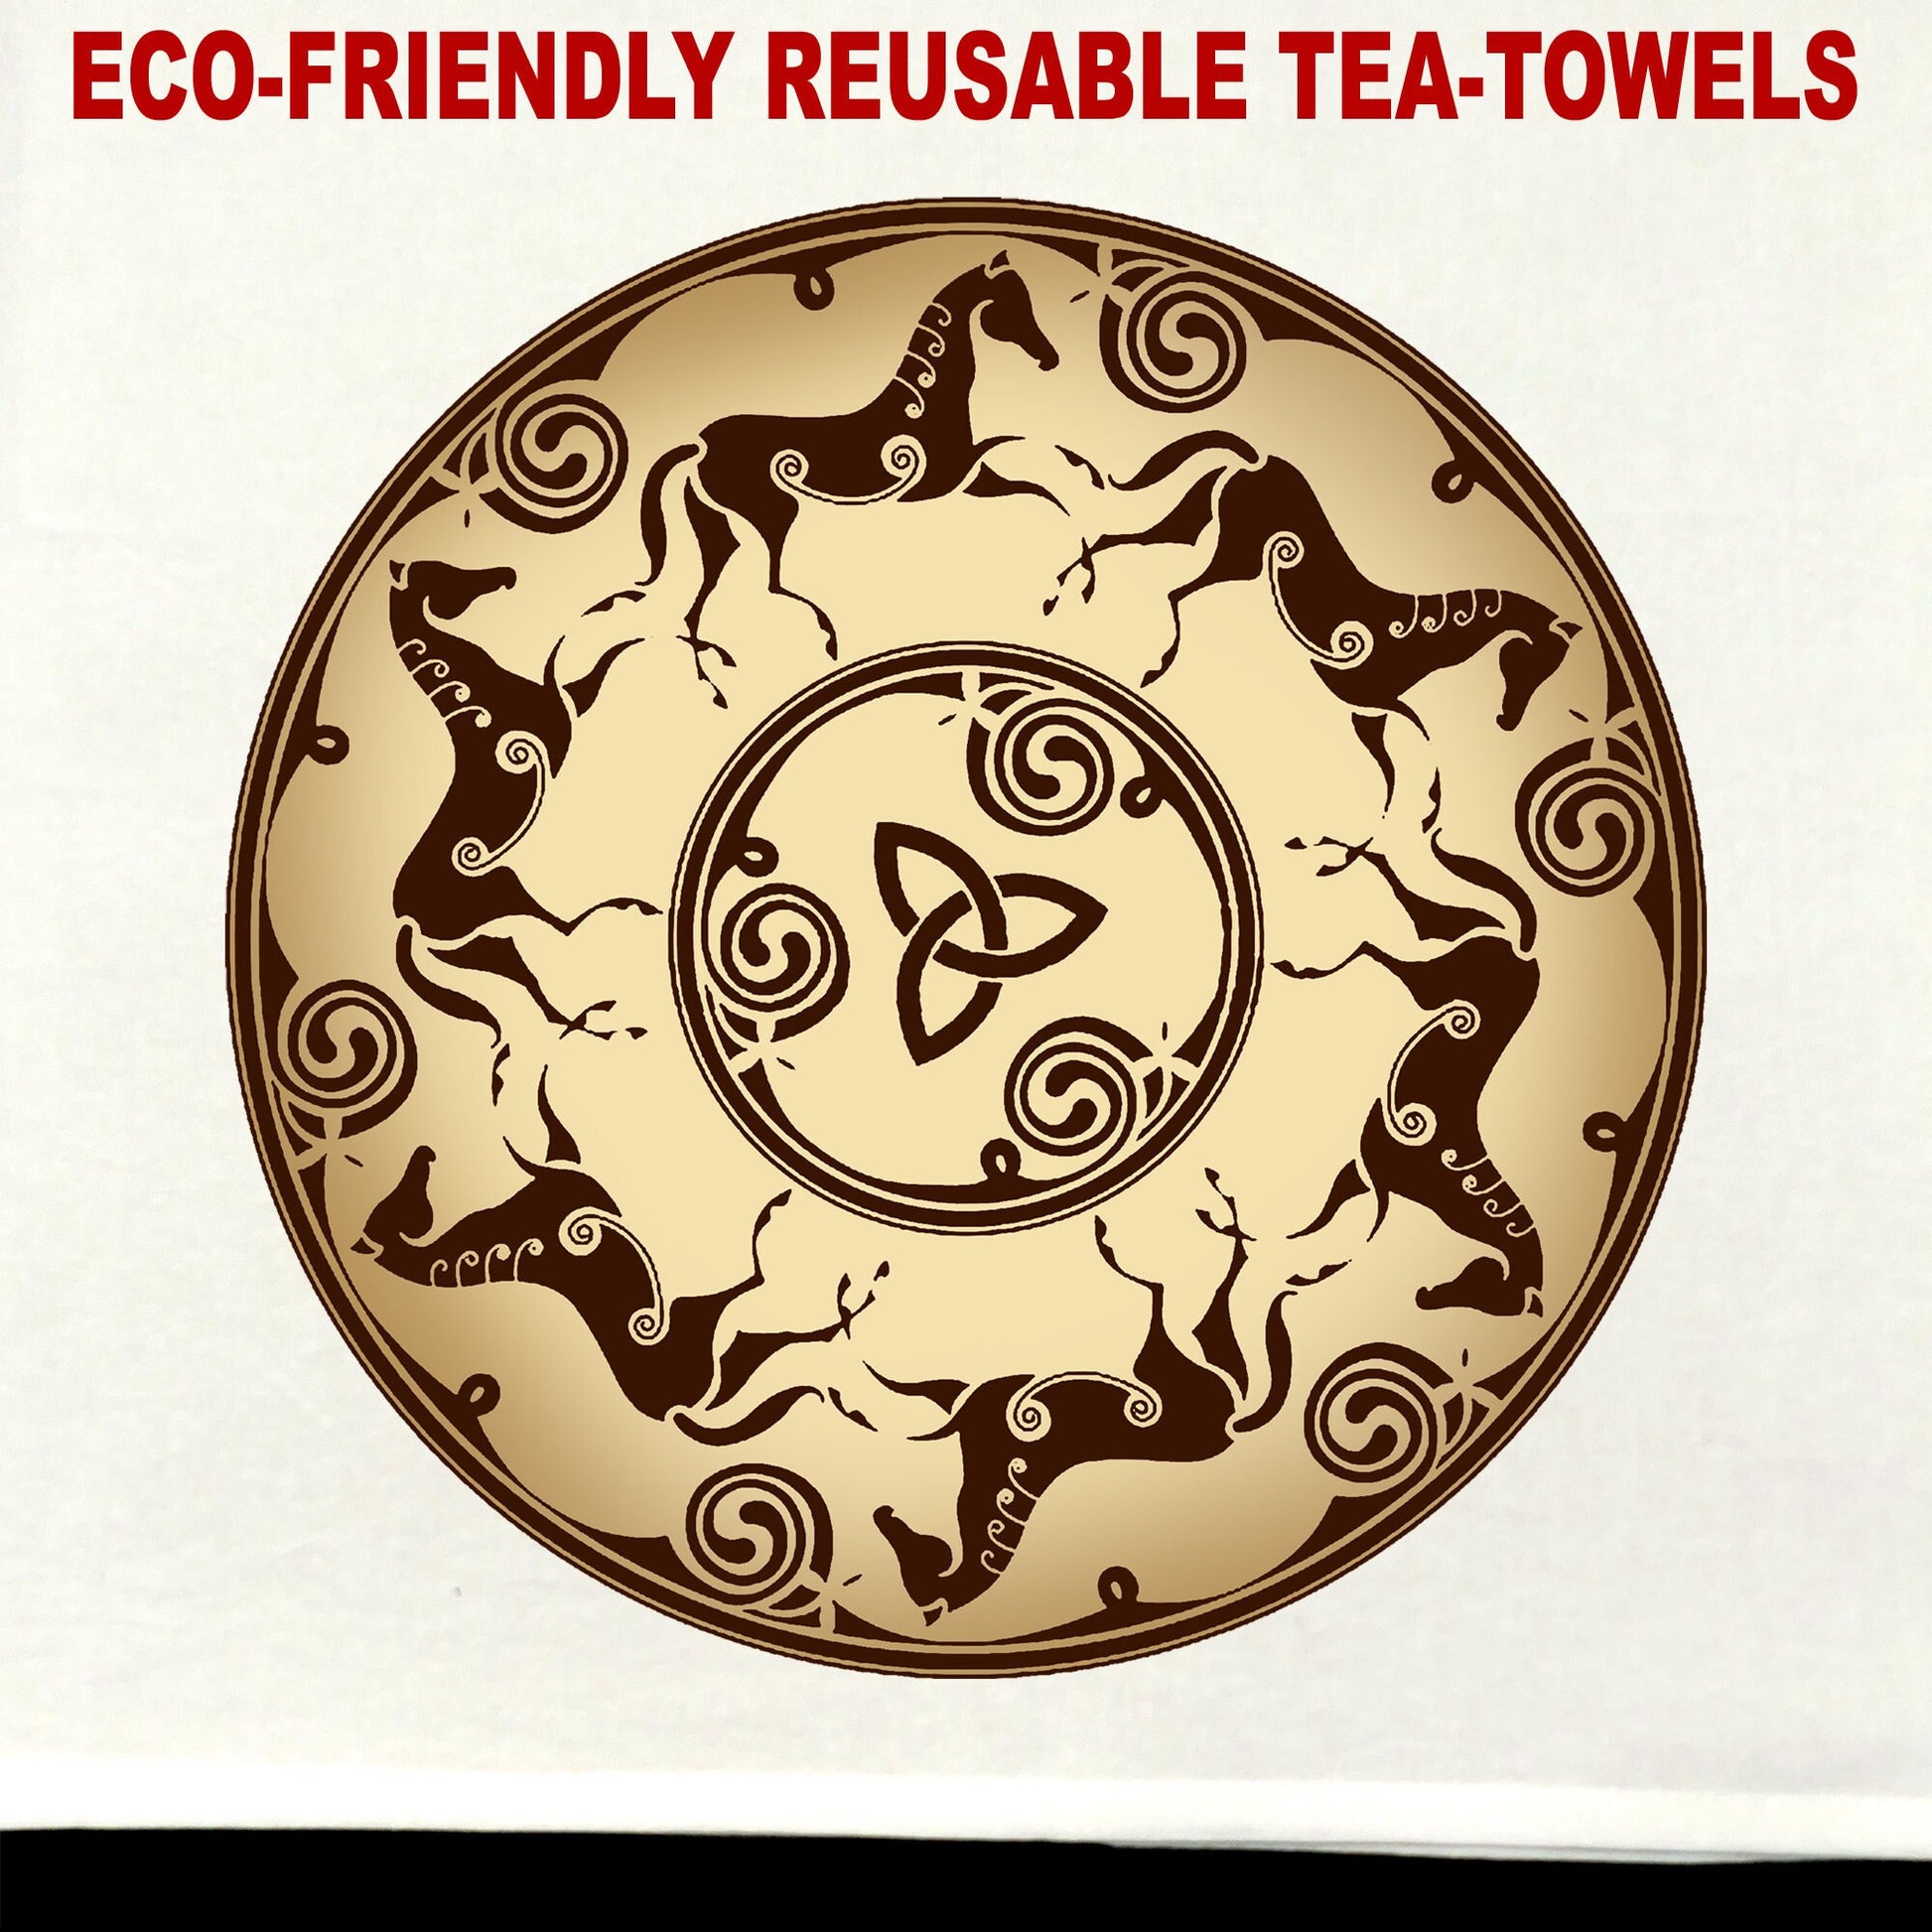 Knotwork Horse Tea Towel / tea towel / dish towel / hand towel / reusable wipe / kitchen gift / kitchen deco